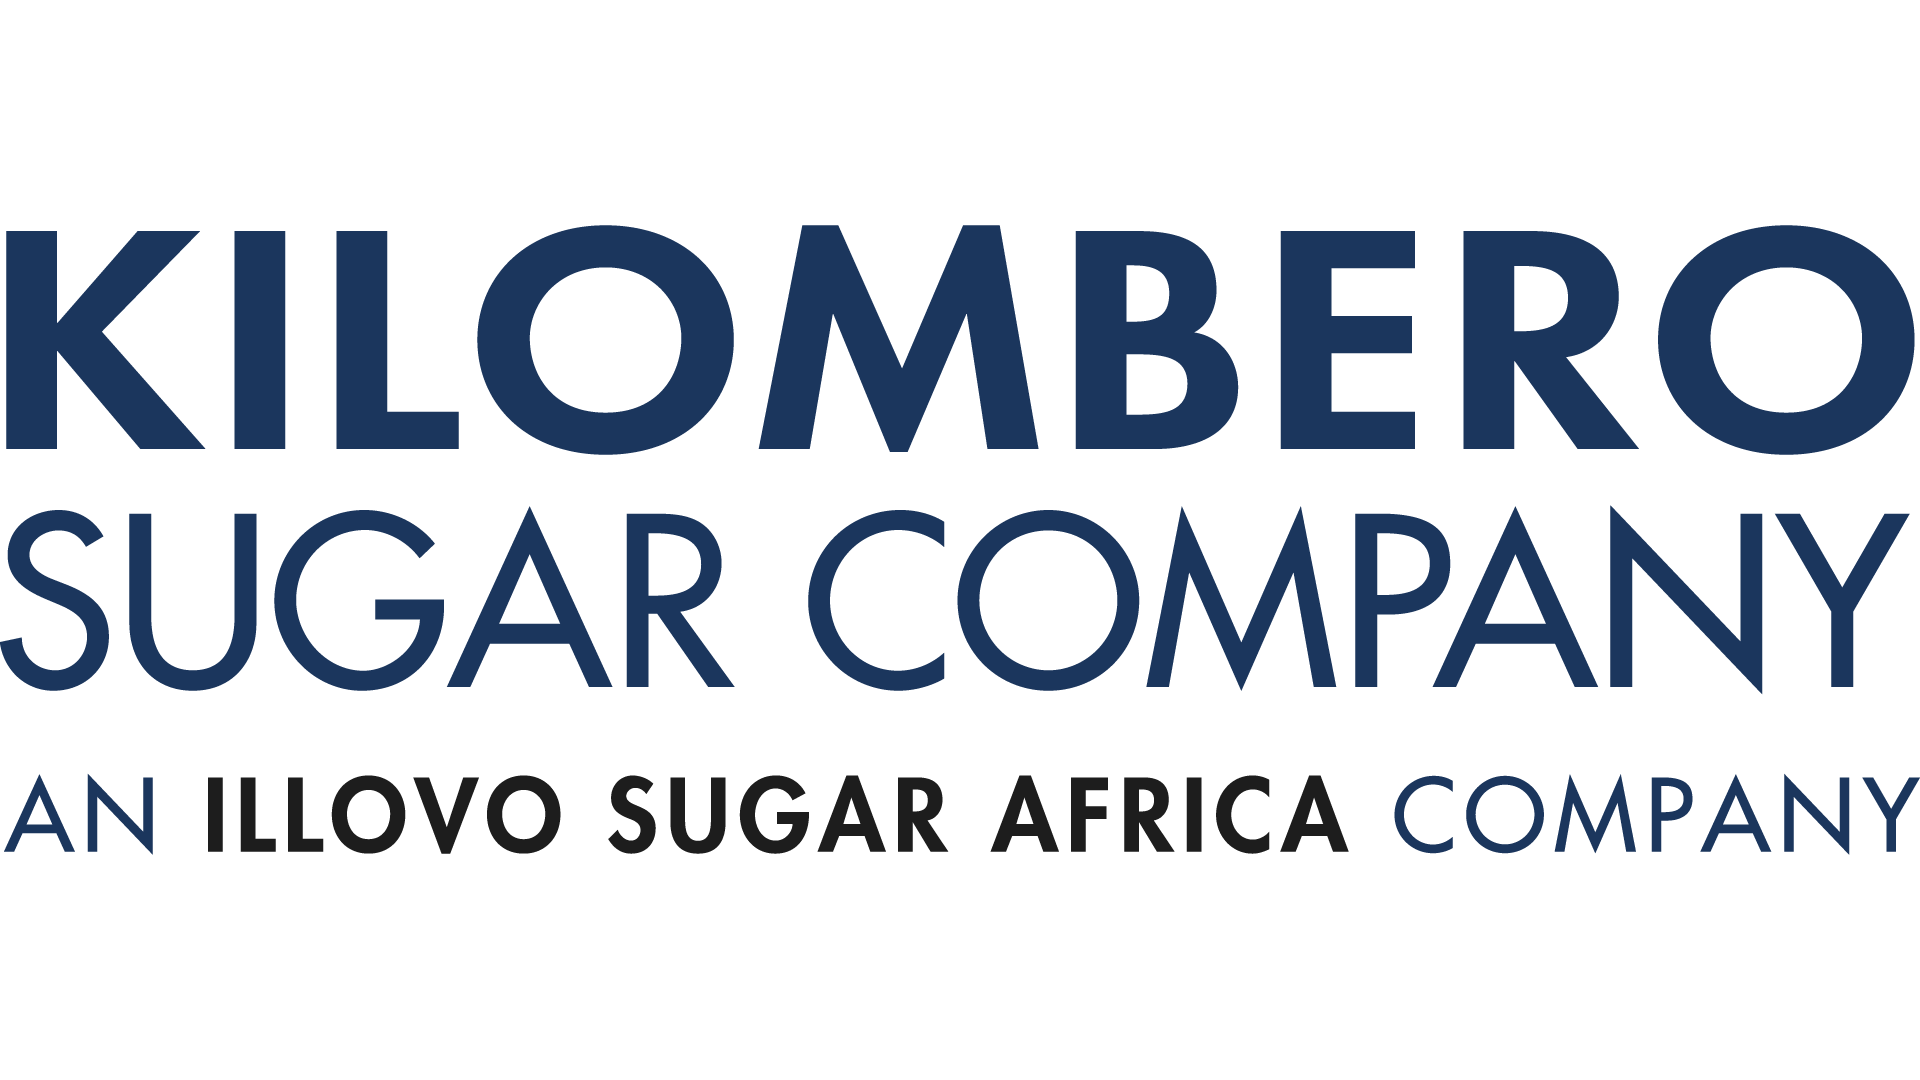 Kilombero Sugar Company